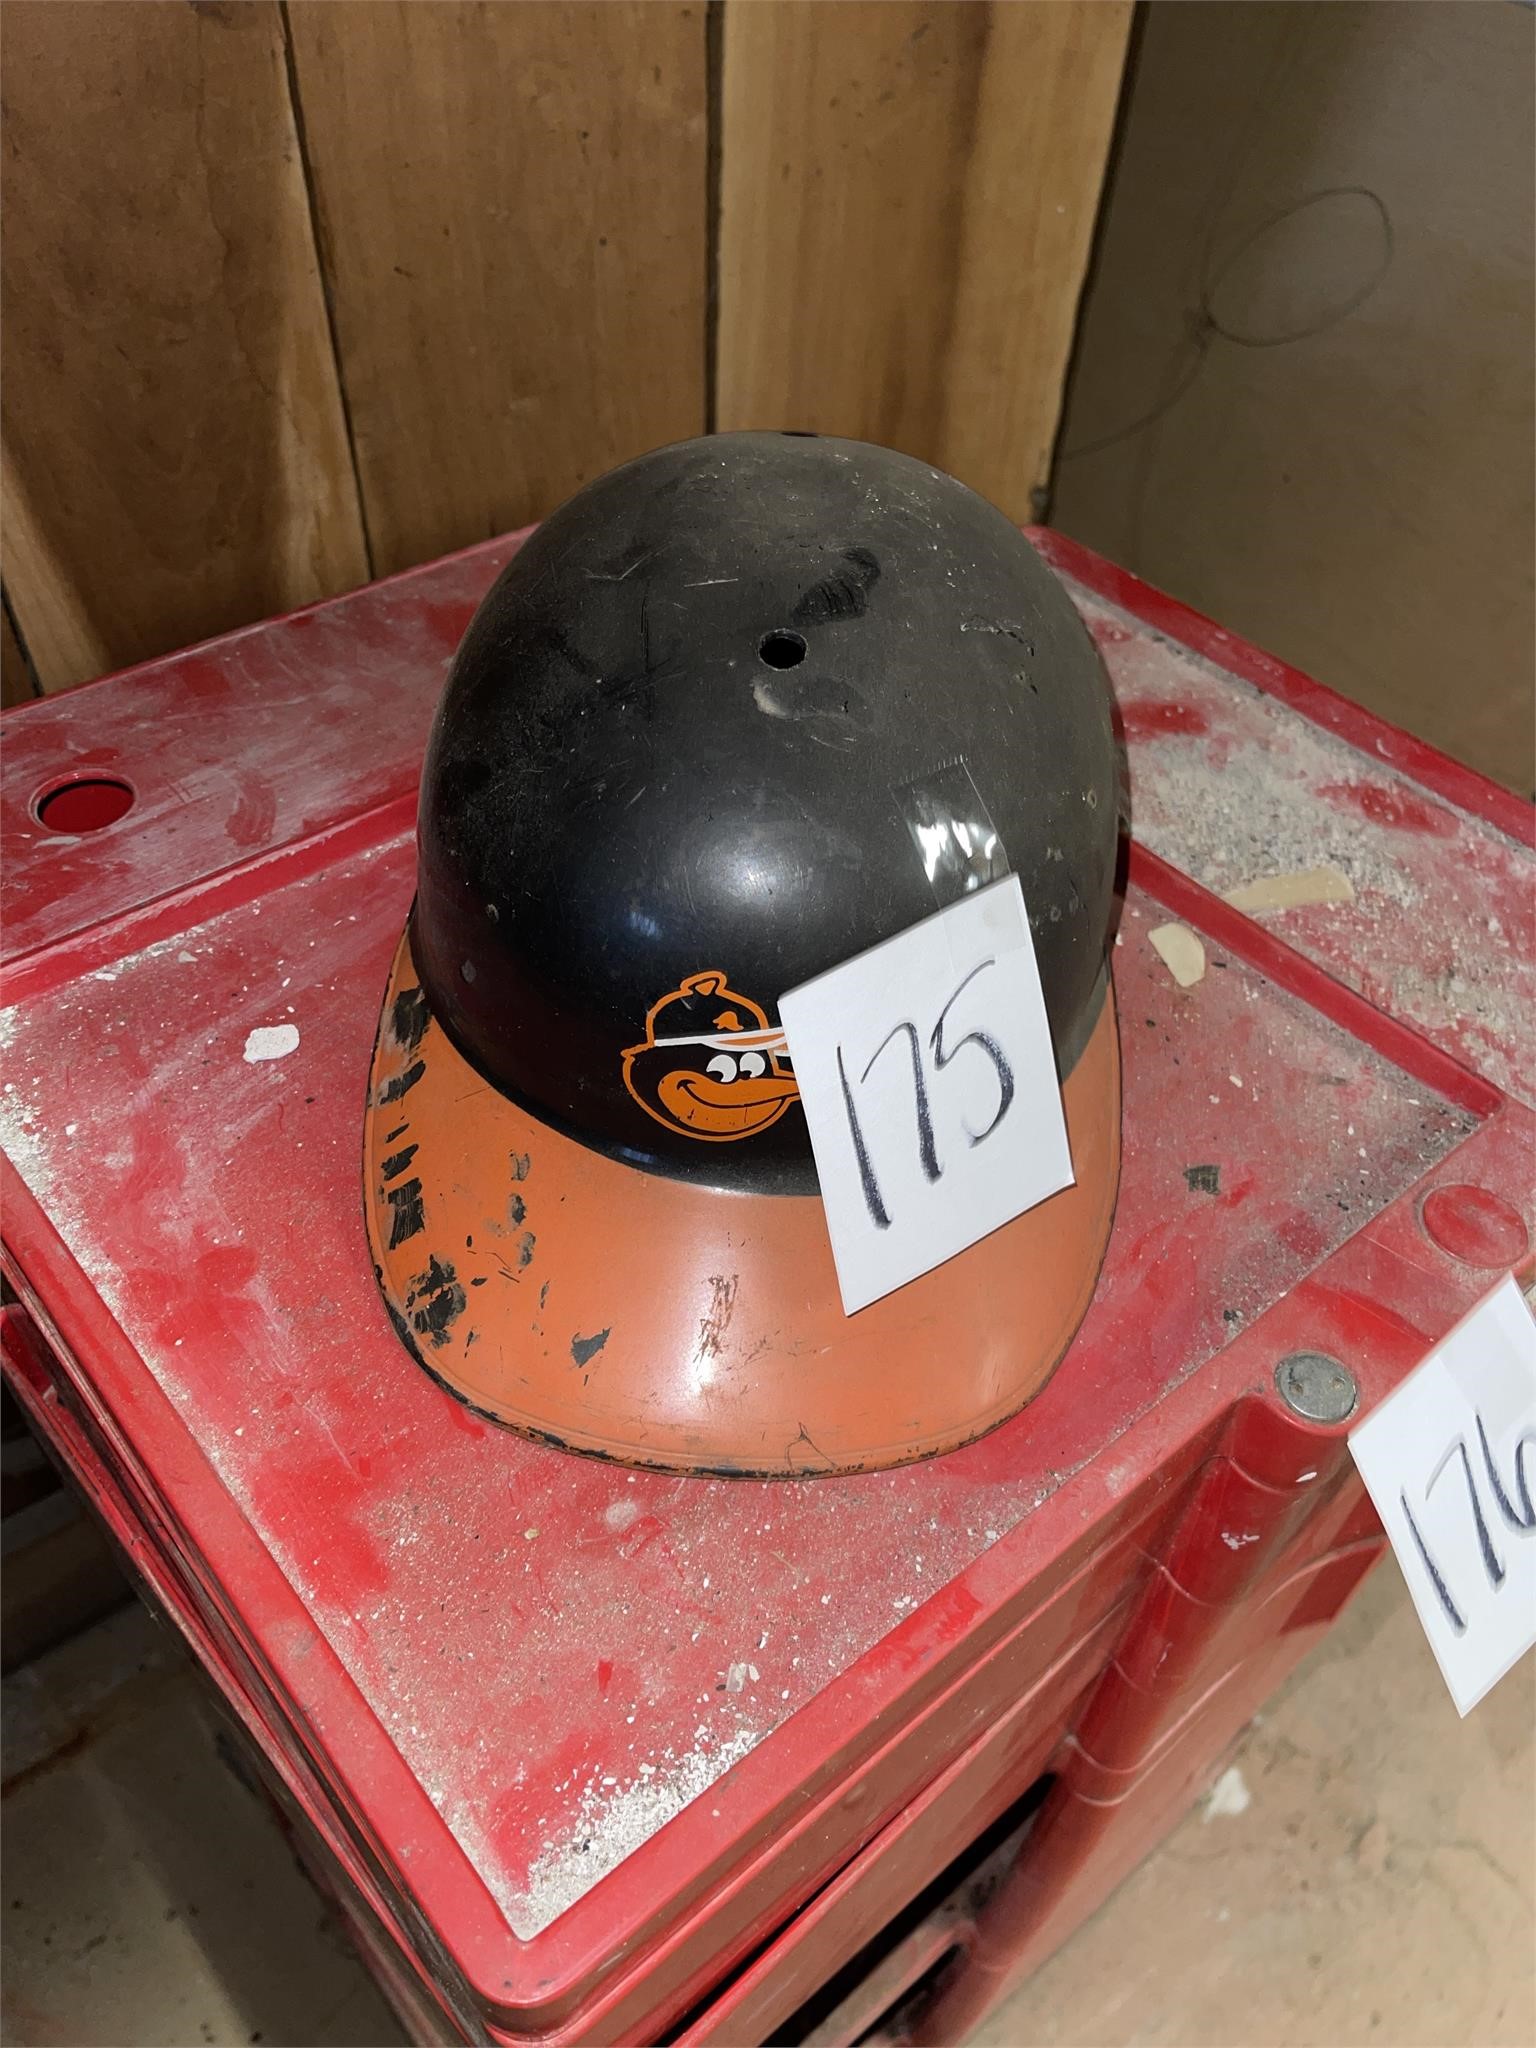 Baltimore Orioles helmet